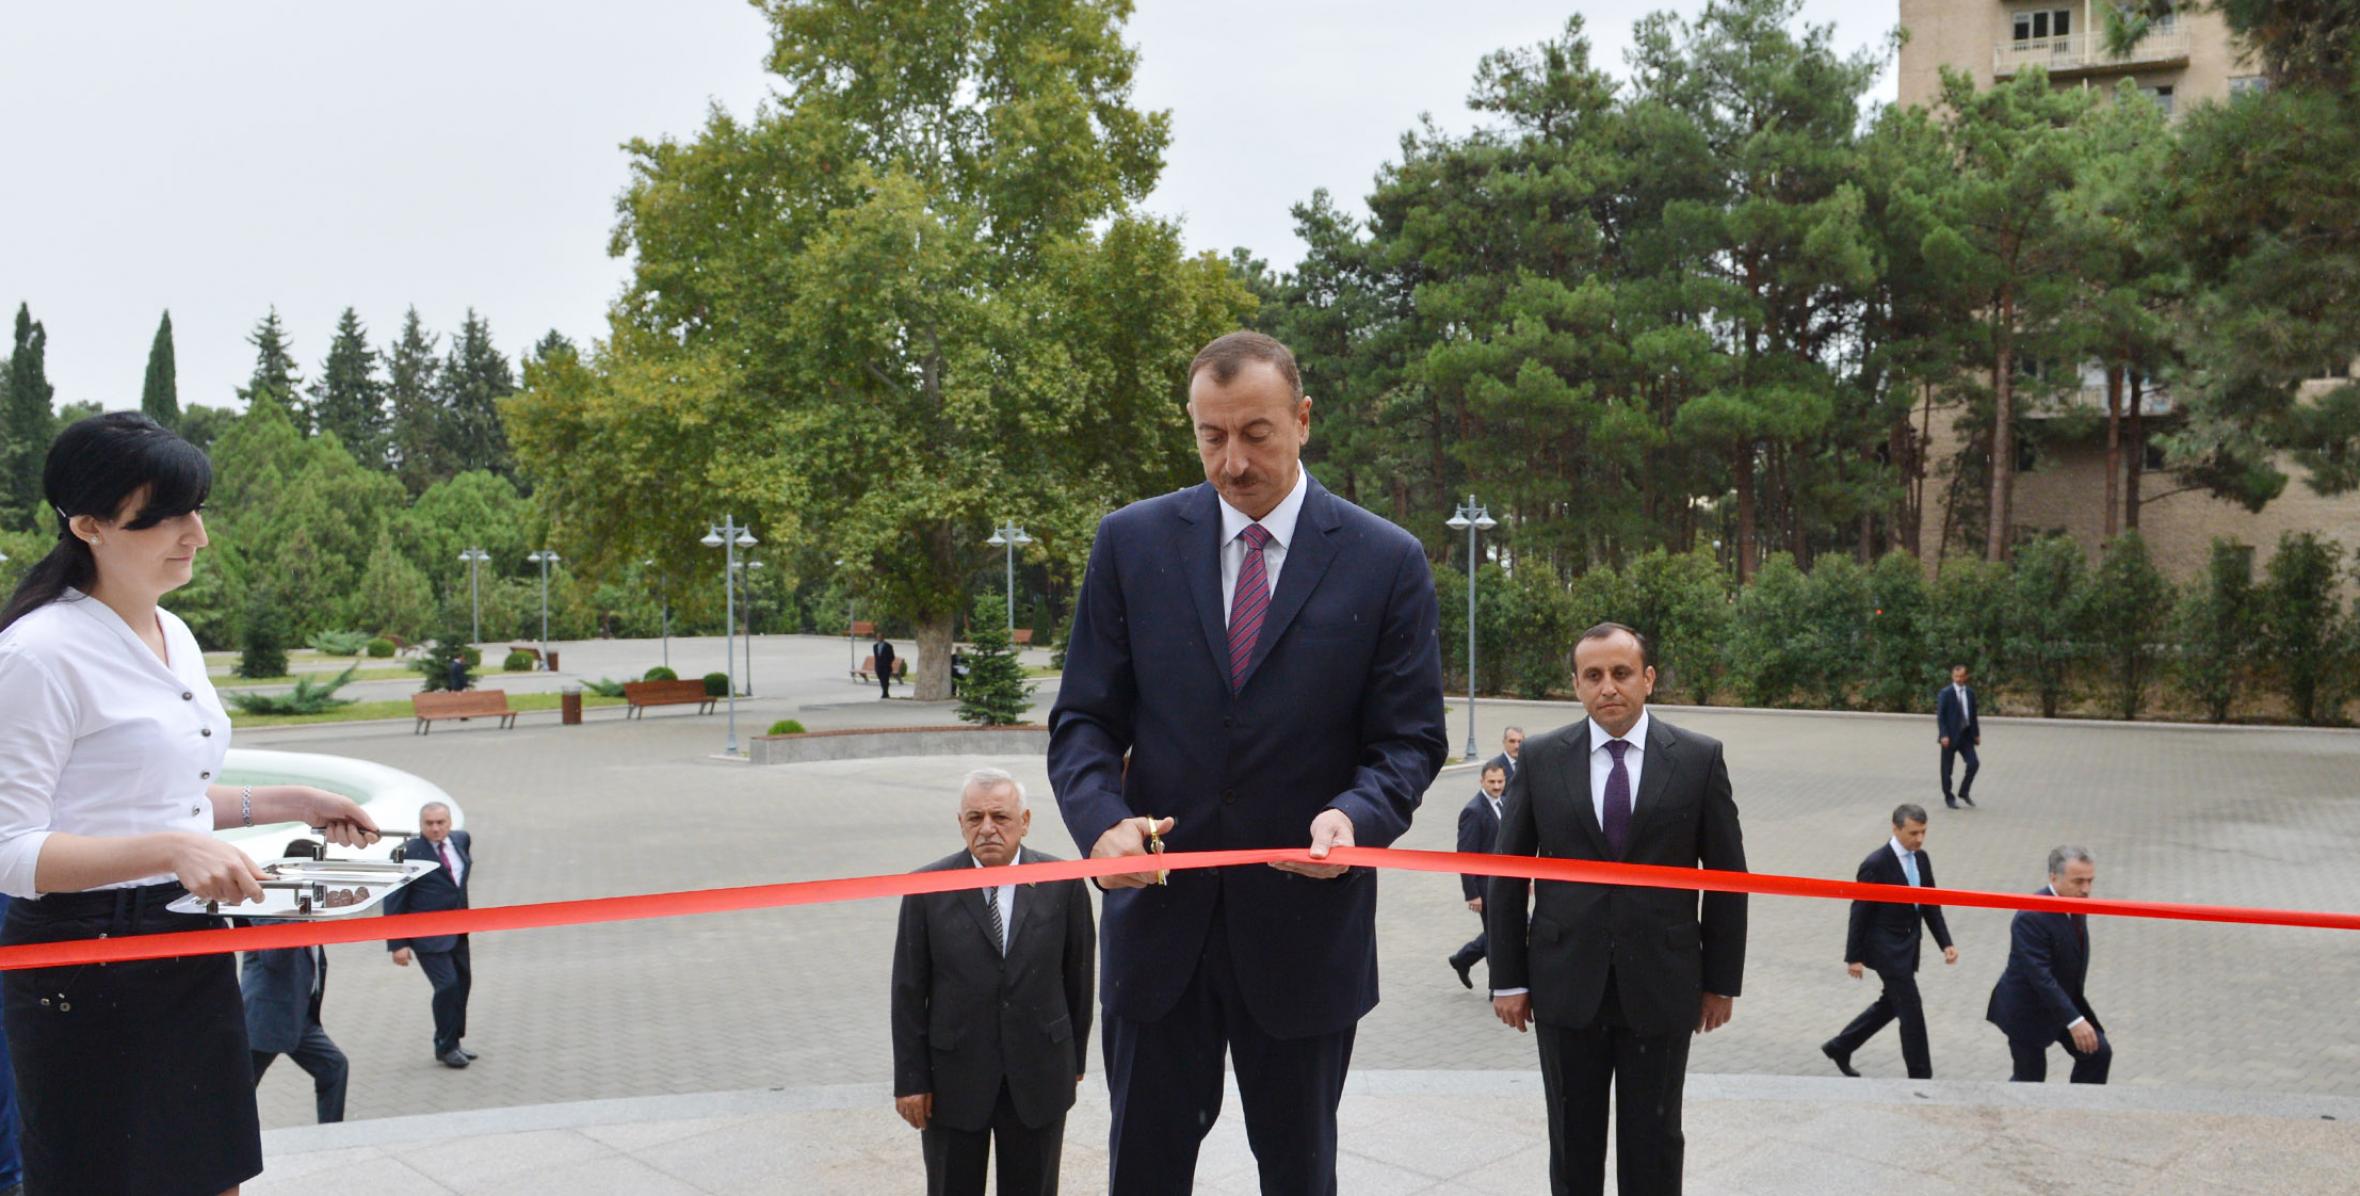 Ilham Aliyev attended the opening of the Heydar Aliyev Center in Naftalan